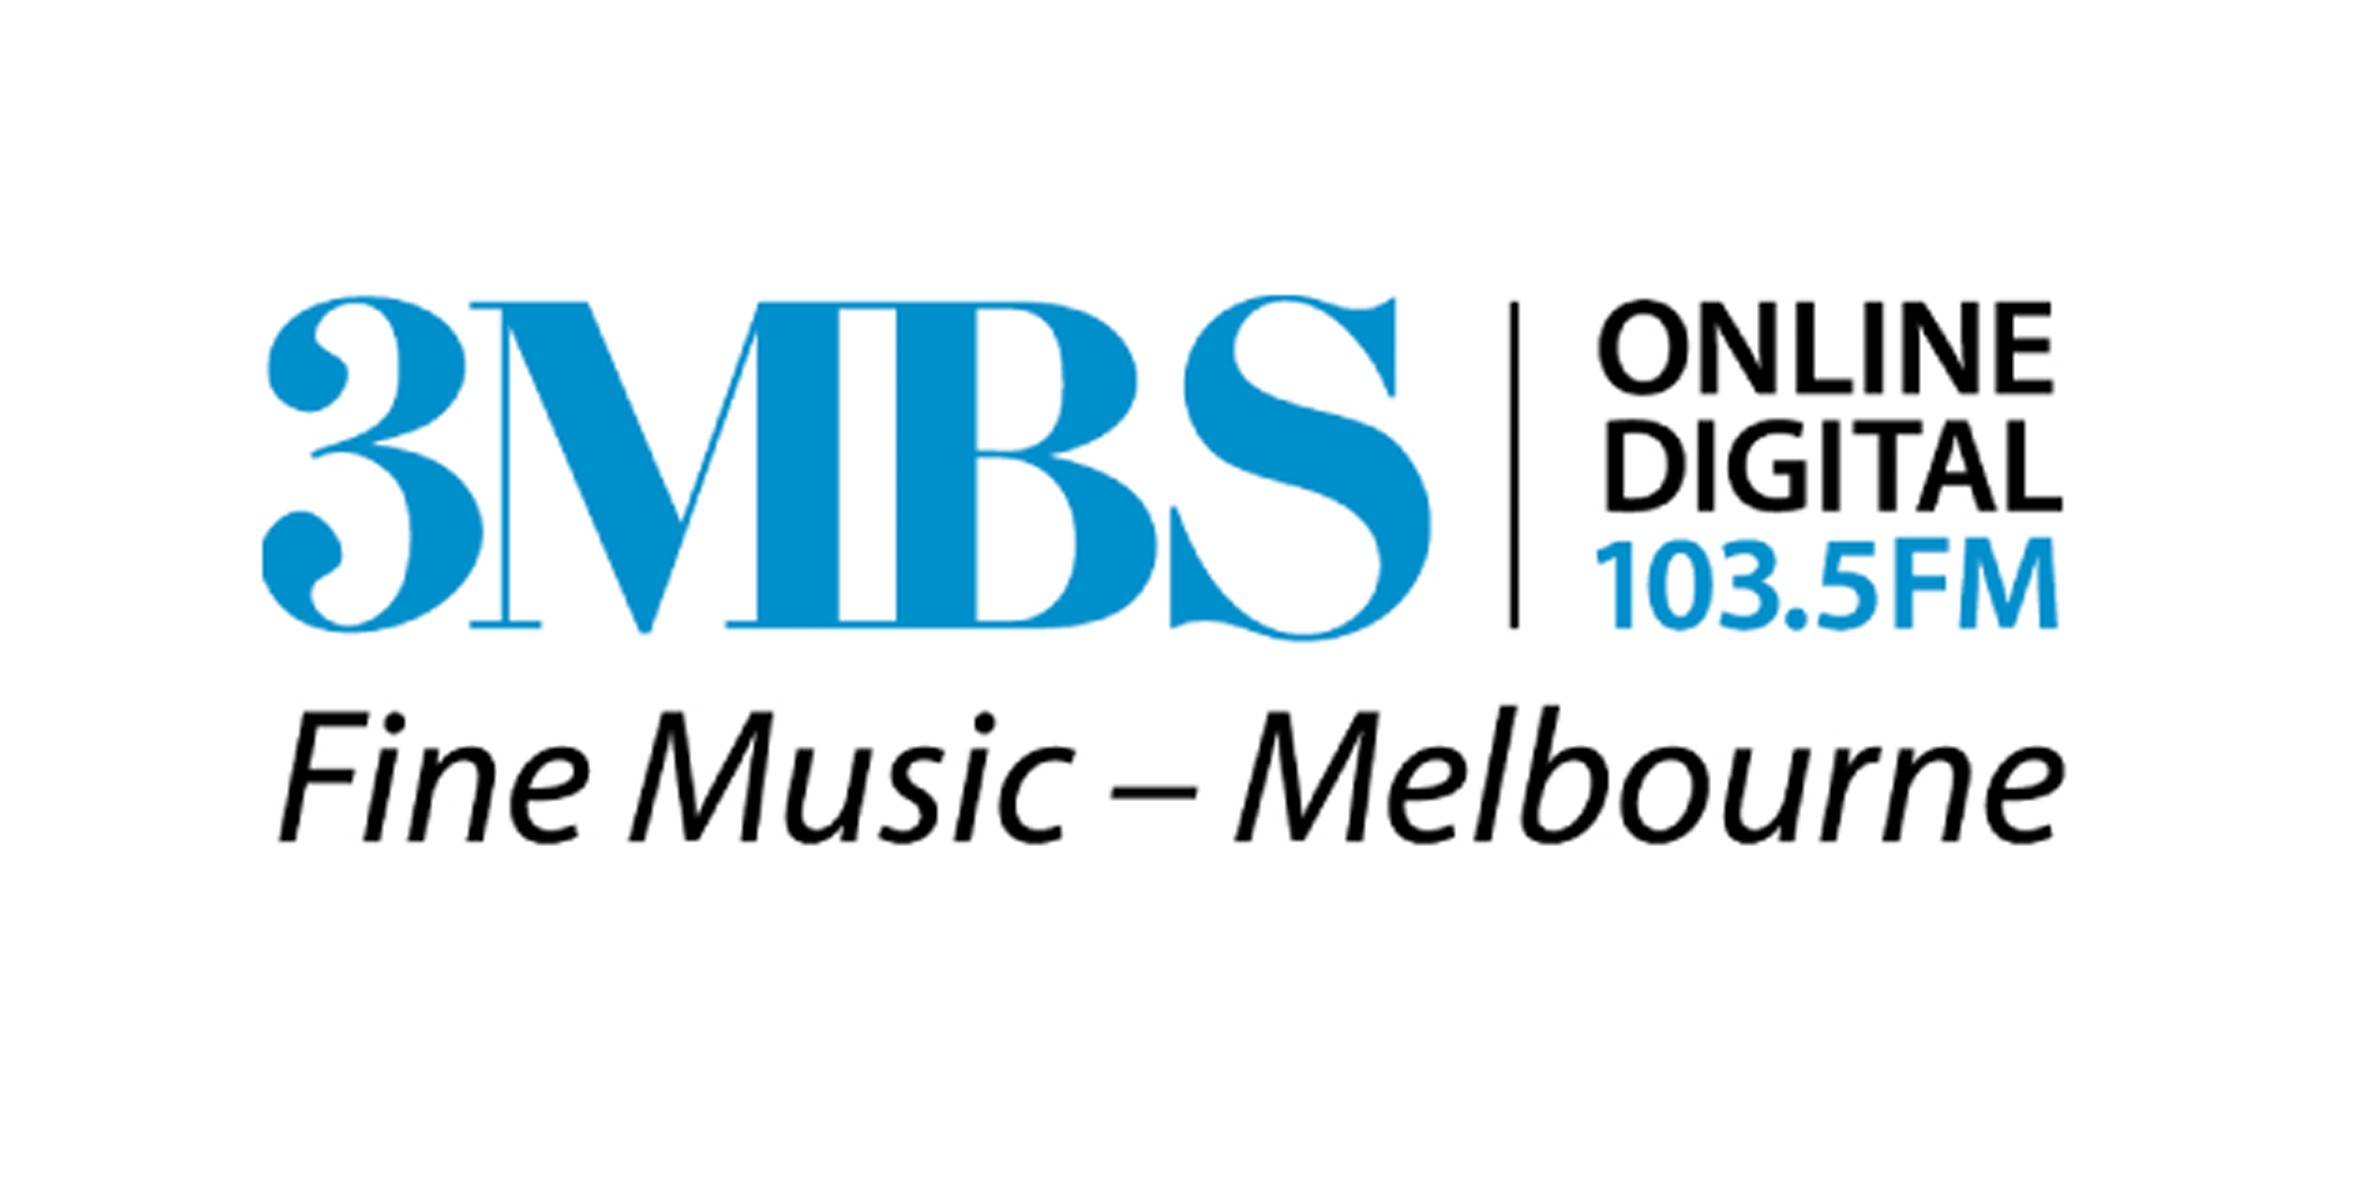 Business Development Manager – Melbourne based radio broadcasting